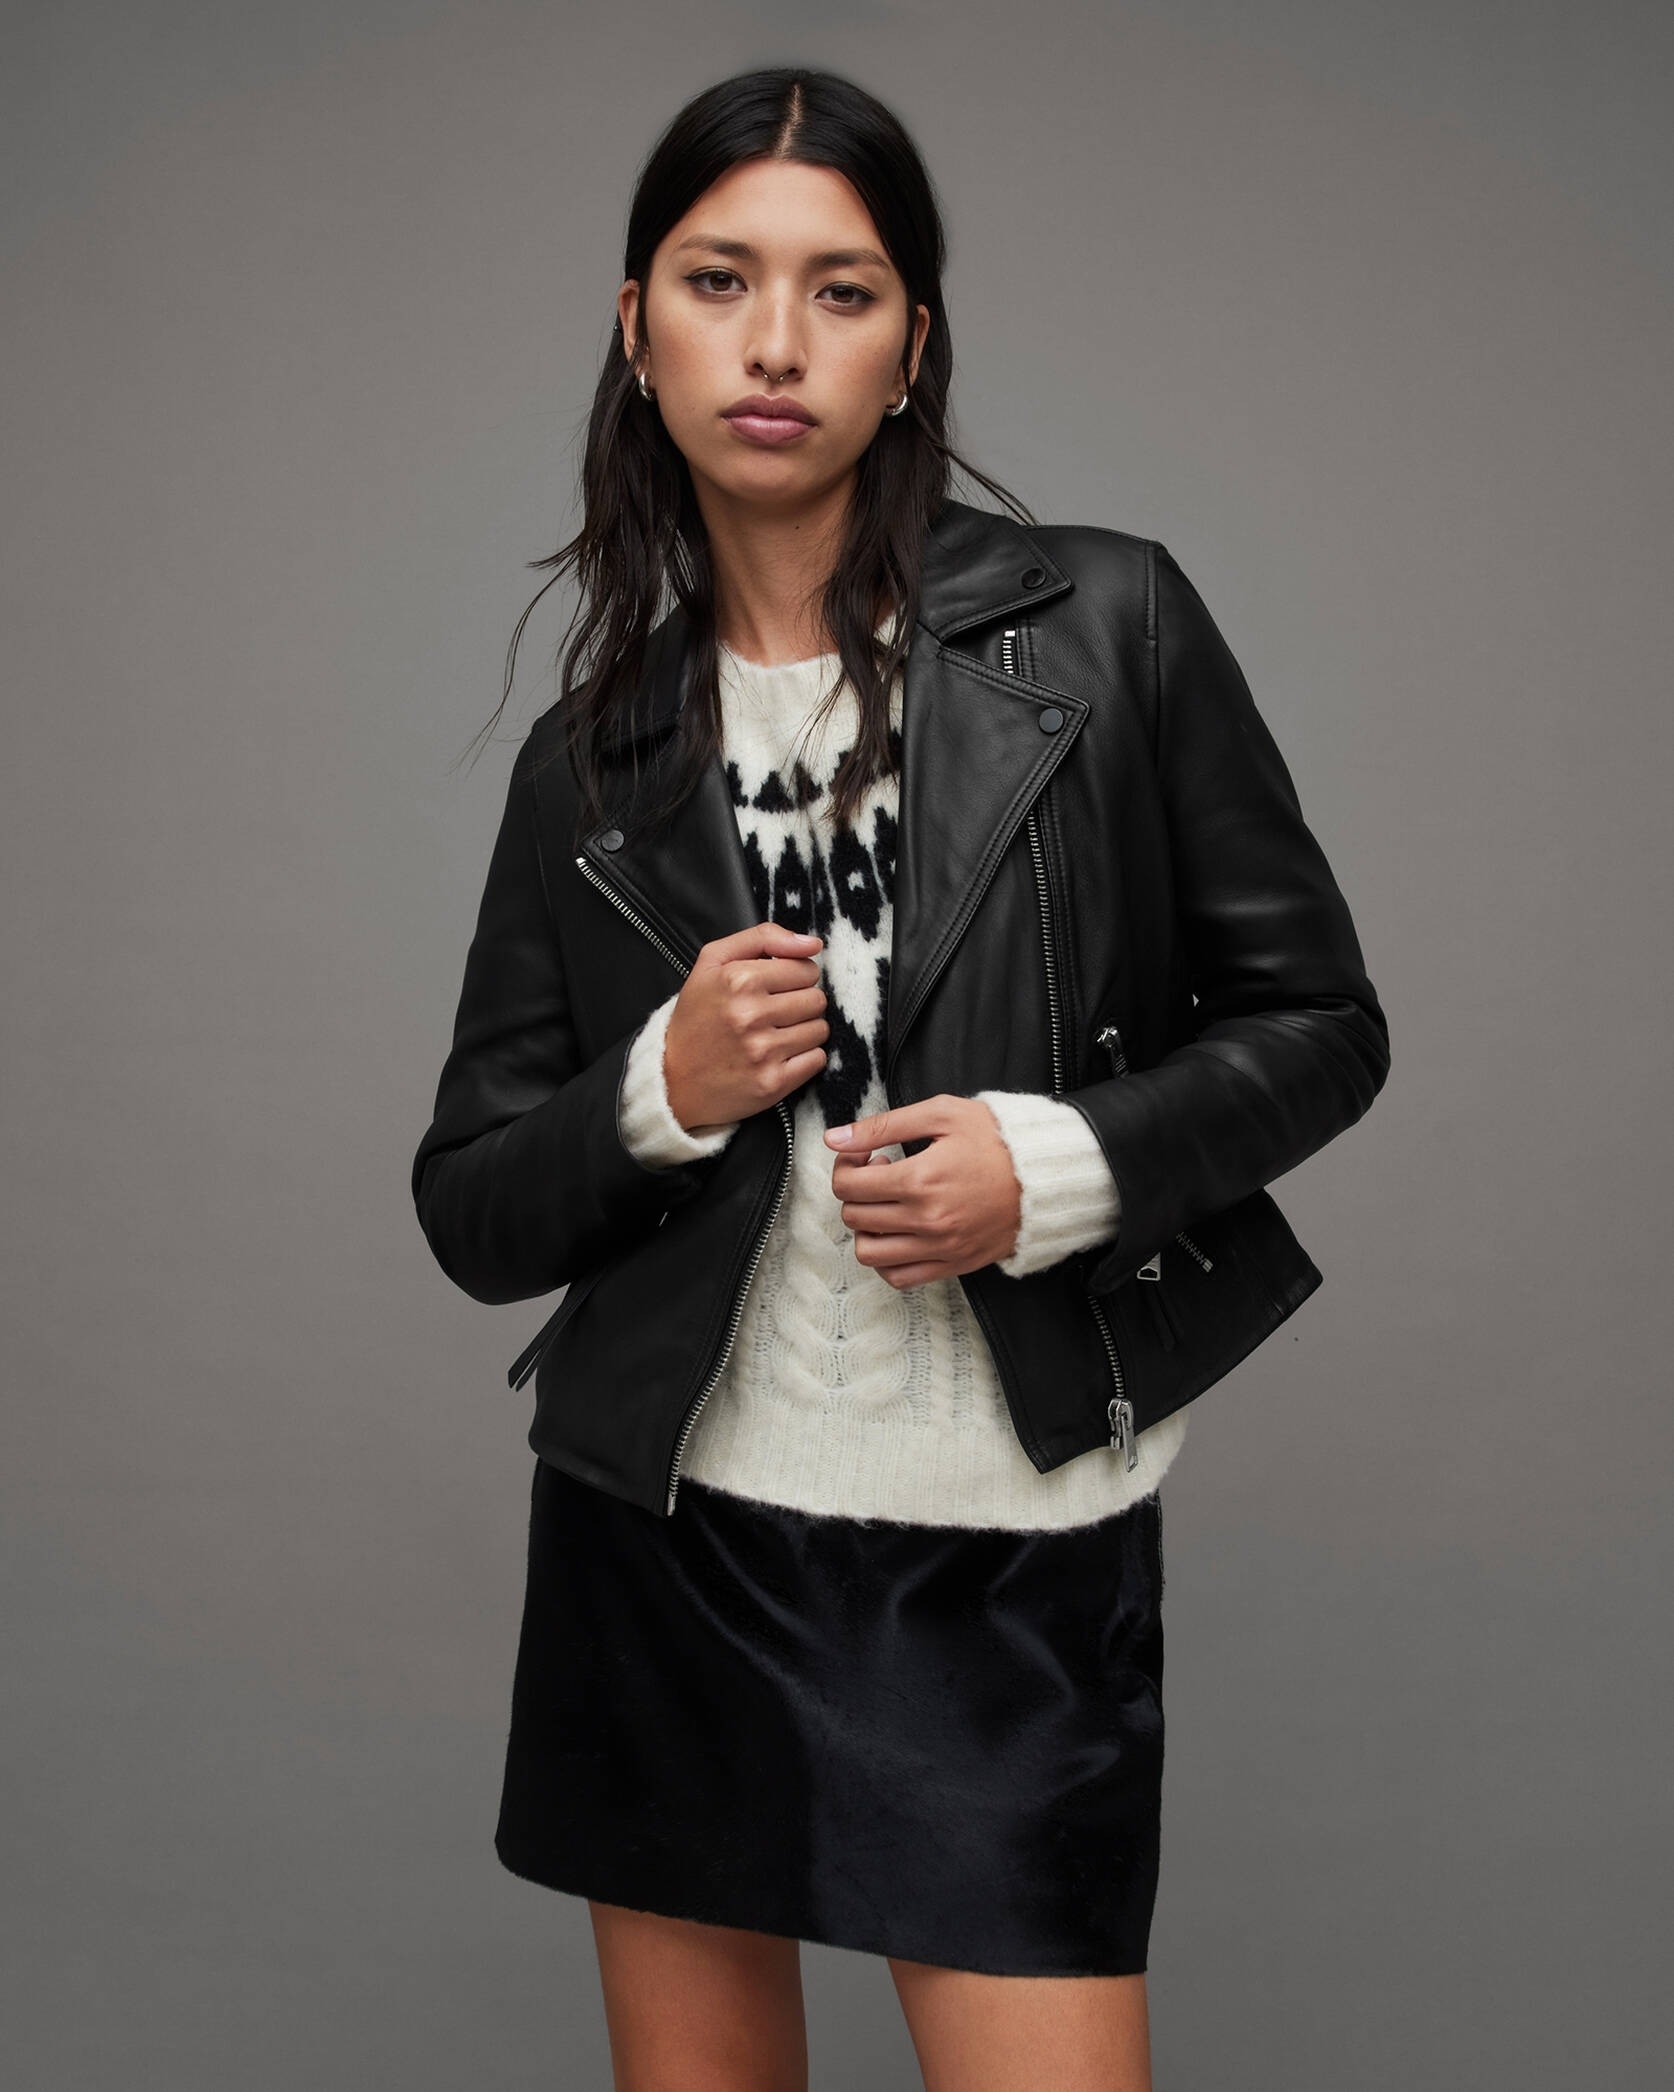 model wearing a leather jacket